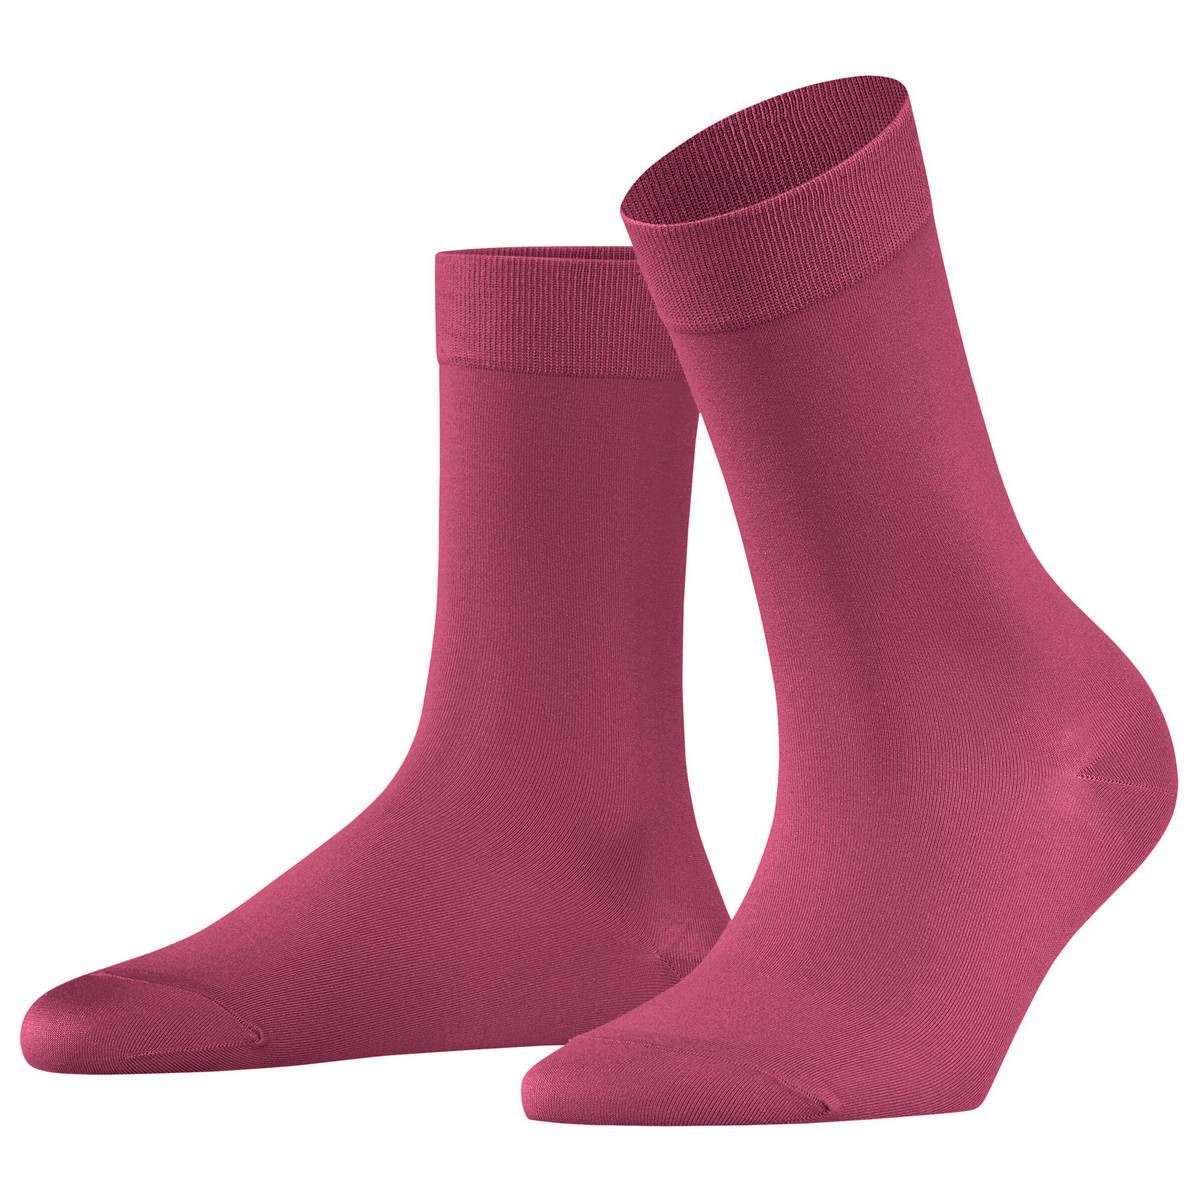 Falke Cotton Touch Socks - English Rose Pink